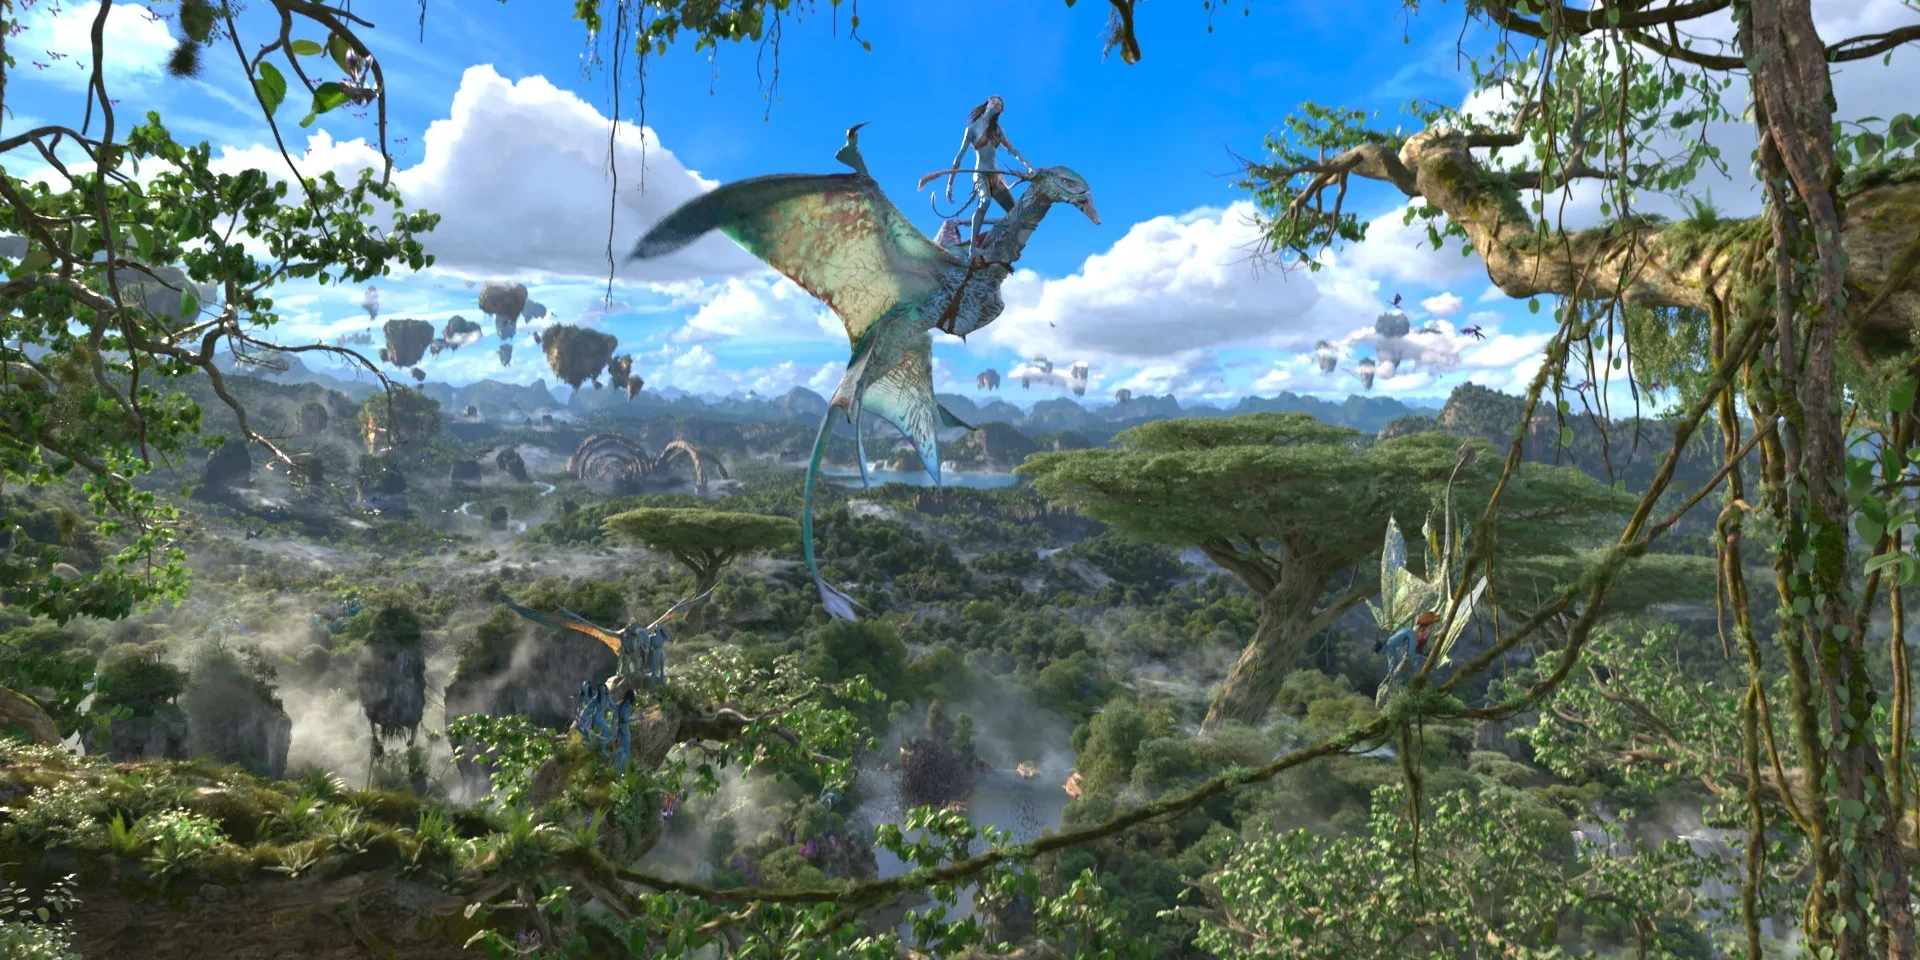 Avatar Flight of Passage on Pandora Ð The World of Avatar at Disney's Animal Kingdom